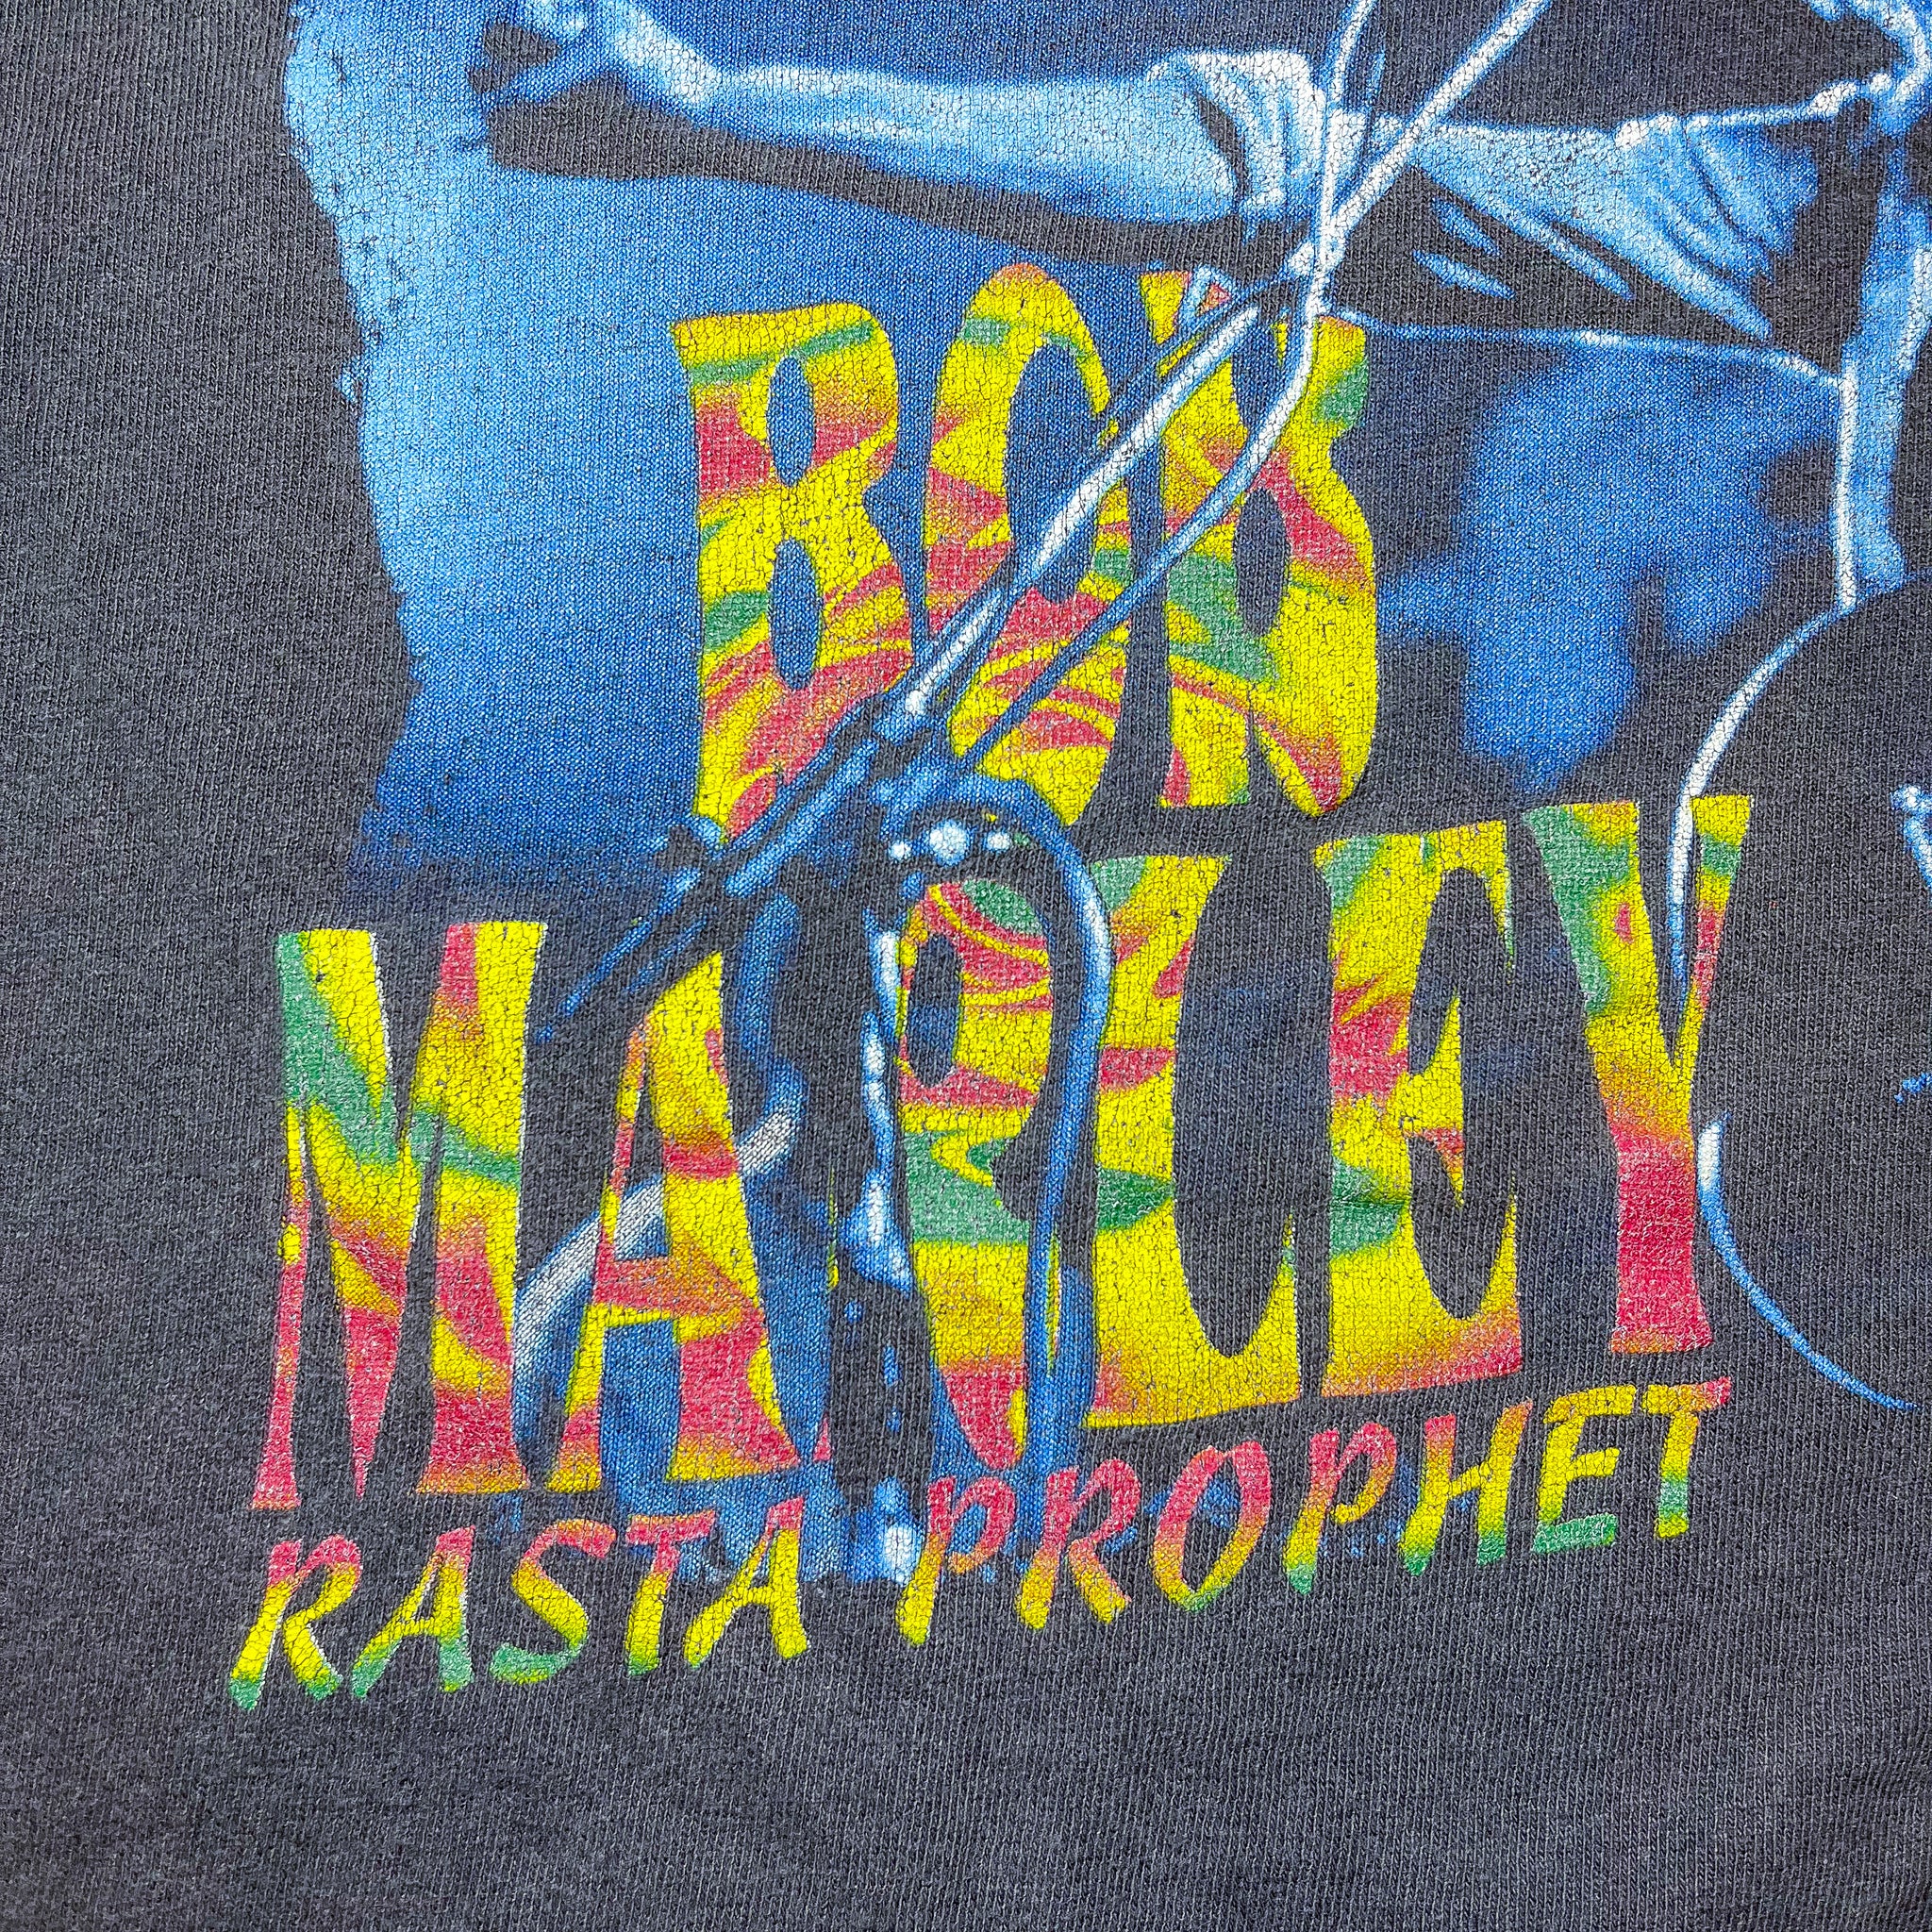 Bob Marley Vintage Tee “Rasta Prophet”